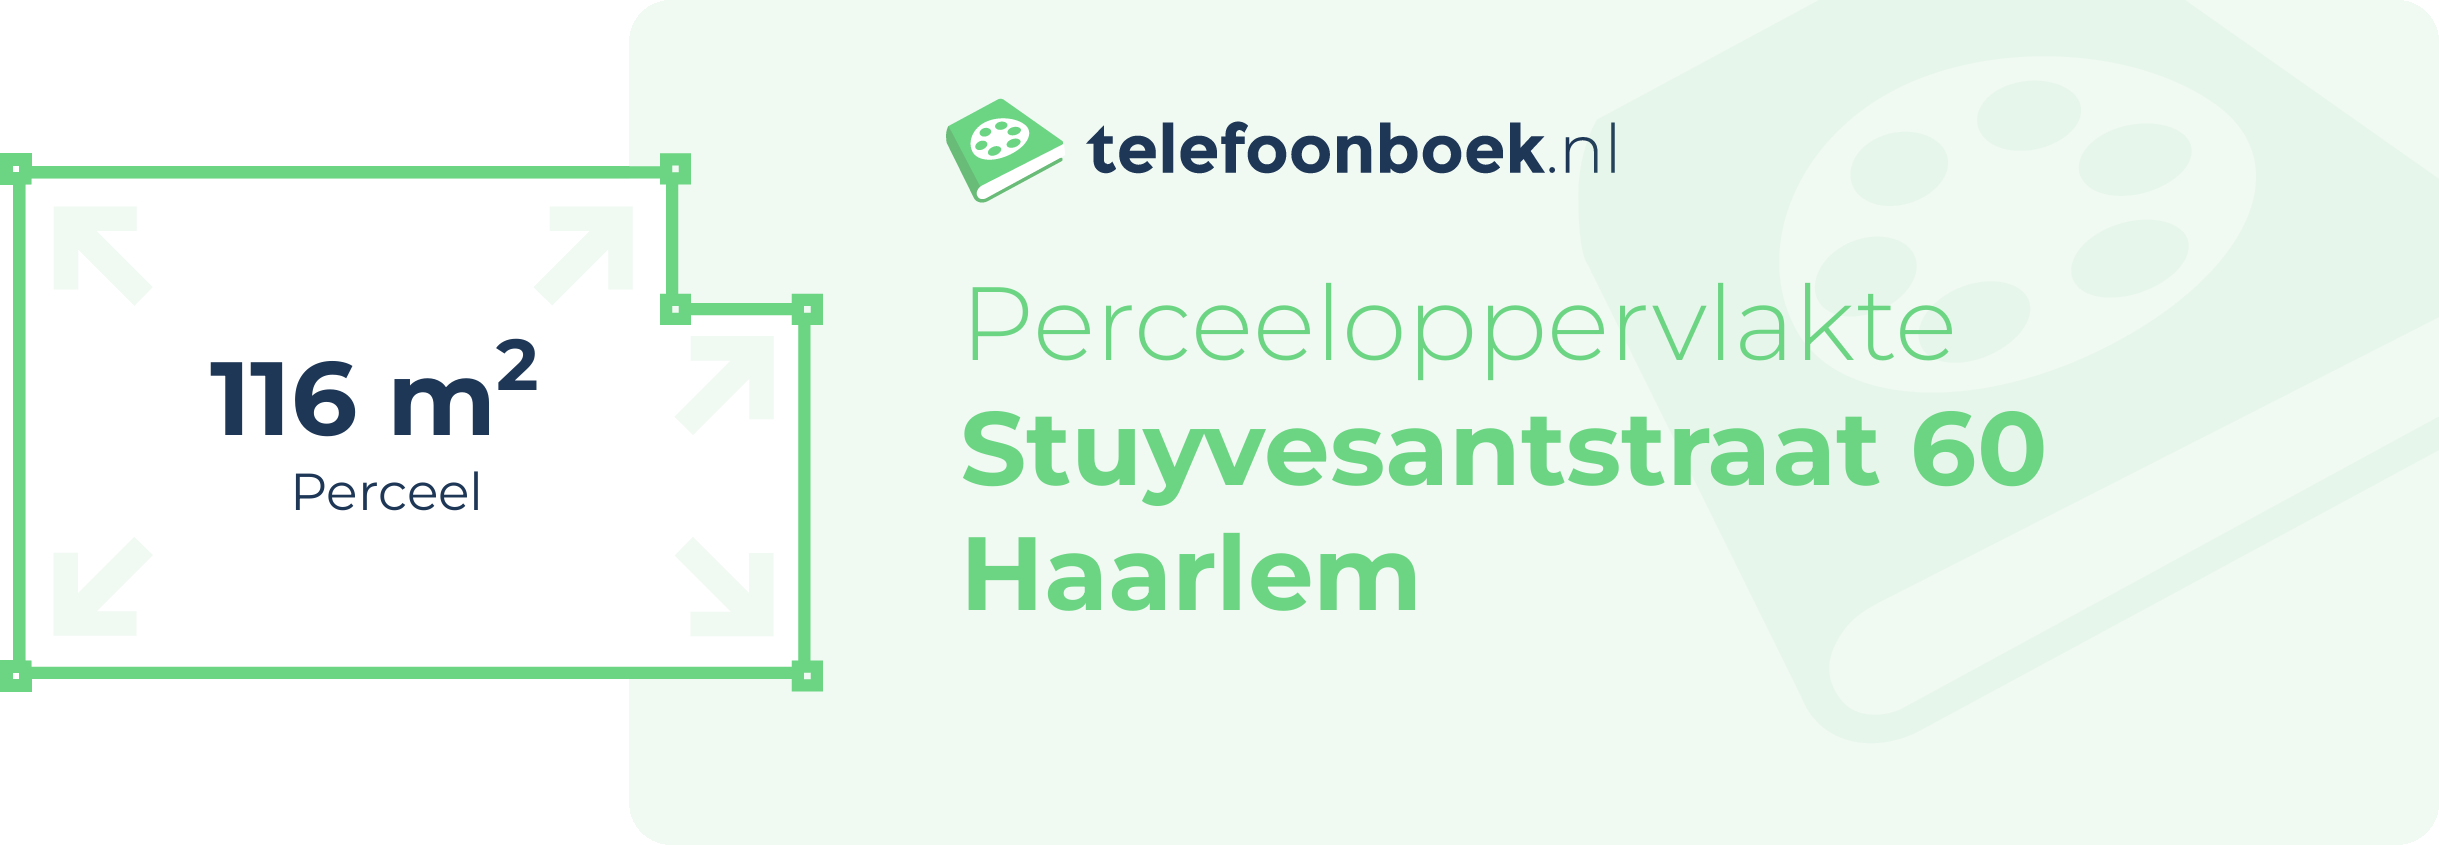 Perceeloppervlakte Stuyvesantstraat 60 Haarlem